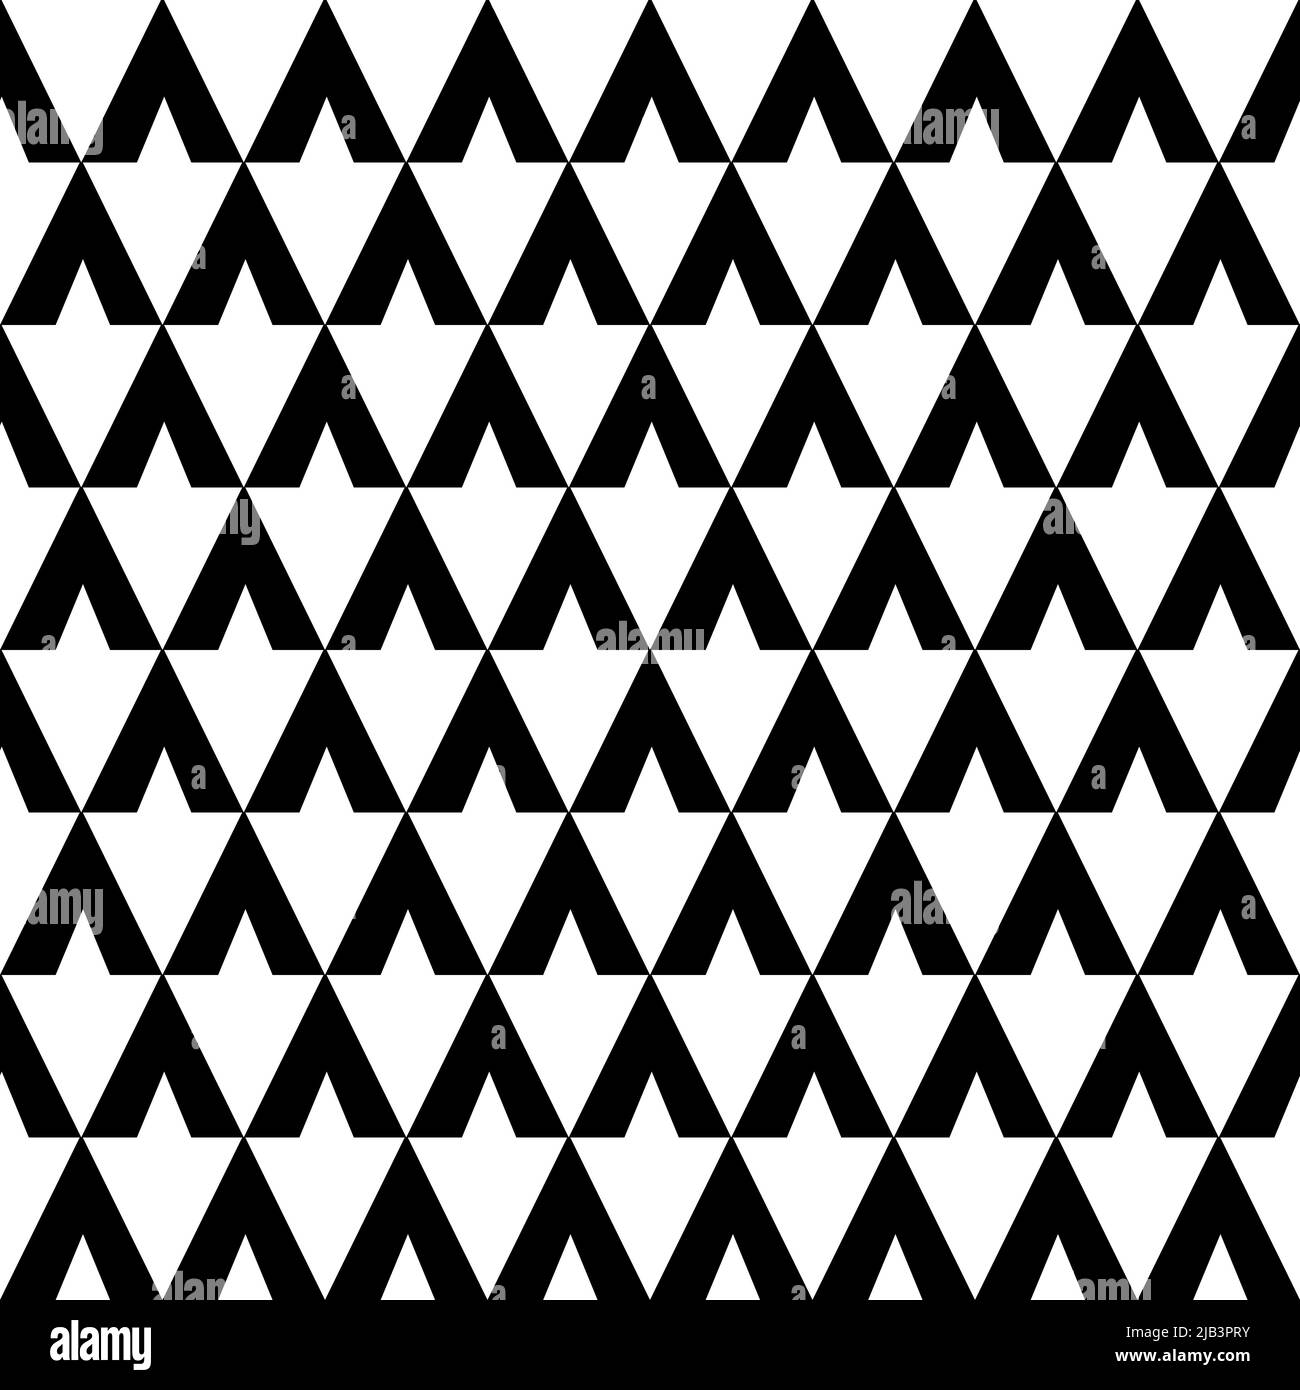 Chevron arrows in a seamless repeat pattern grid design - Vector Illustration Stock Vector